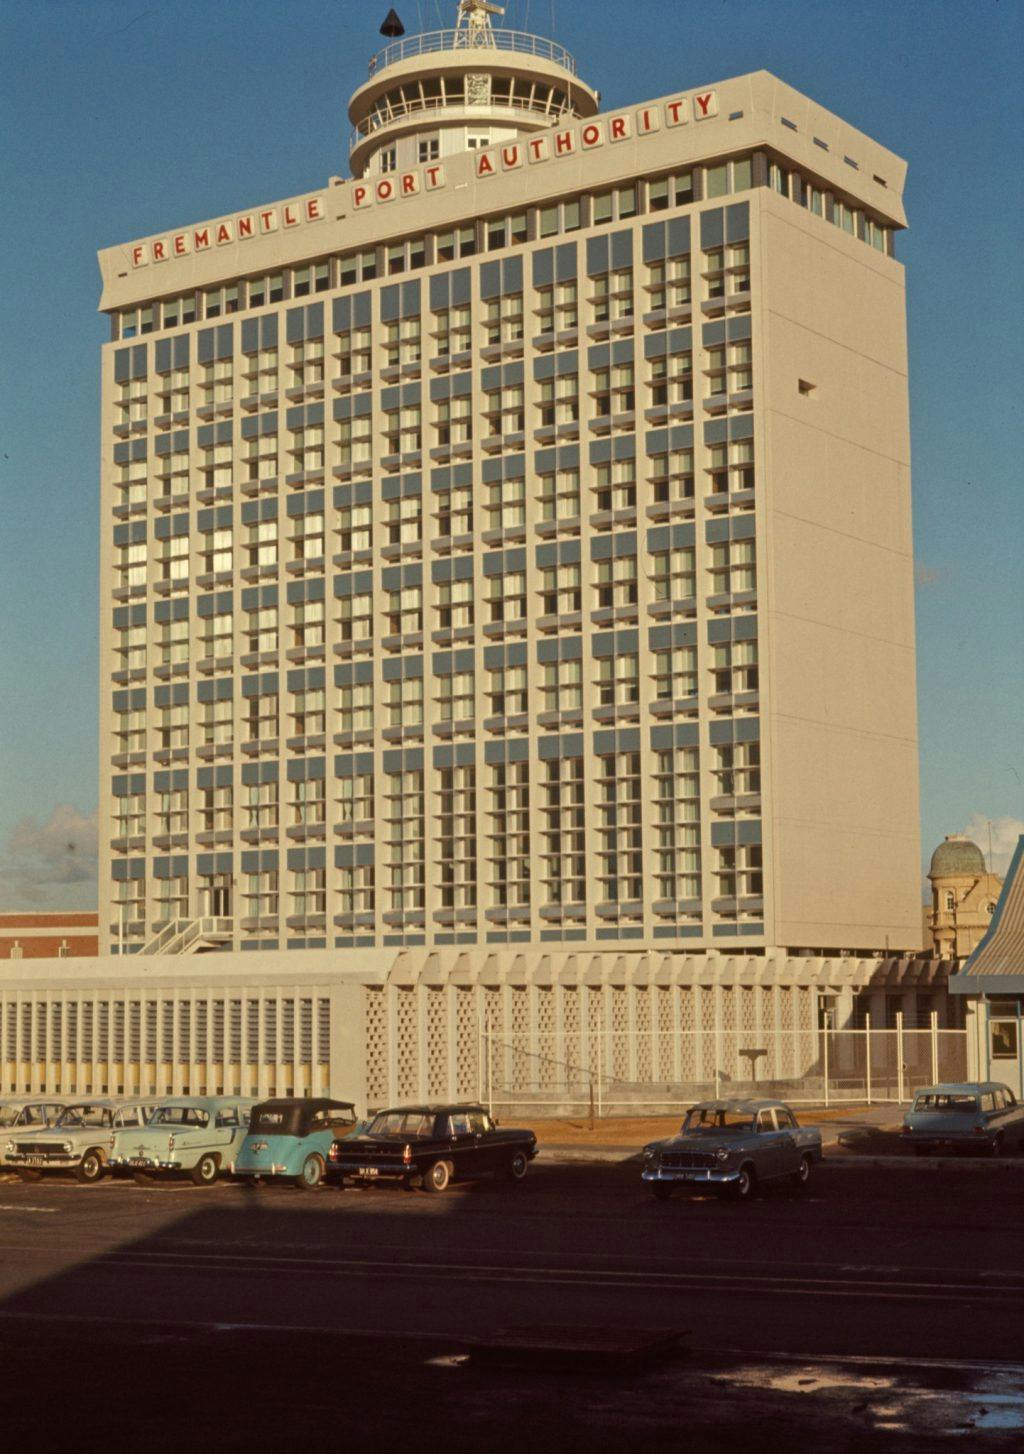 Forgotten Perth Vintage Fremantle Port Authority 1965